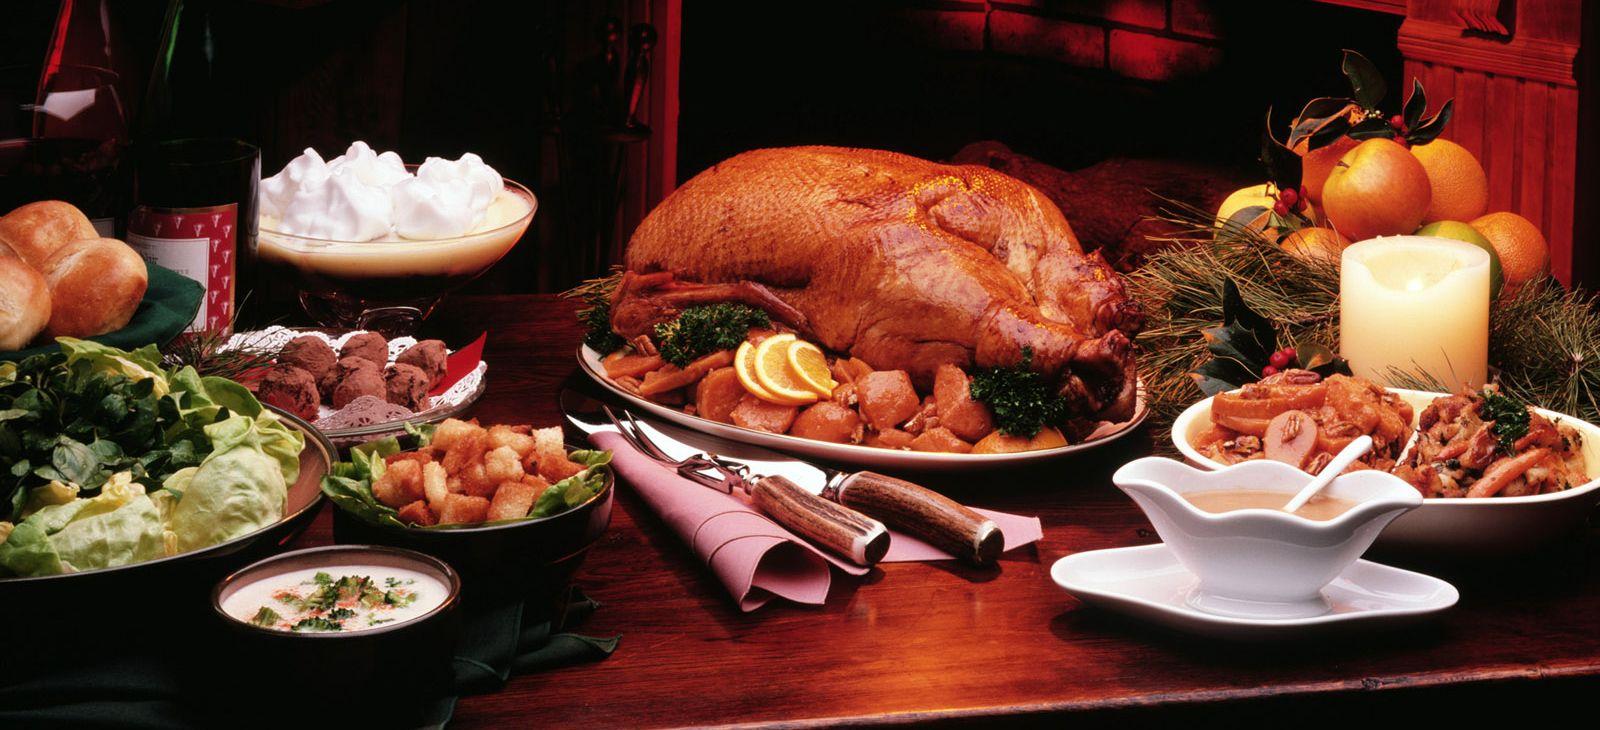 Thanksgiving Dinner Wallpapers - Top Free Thanksgiving Dinner ...